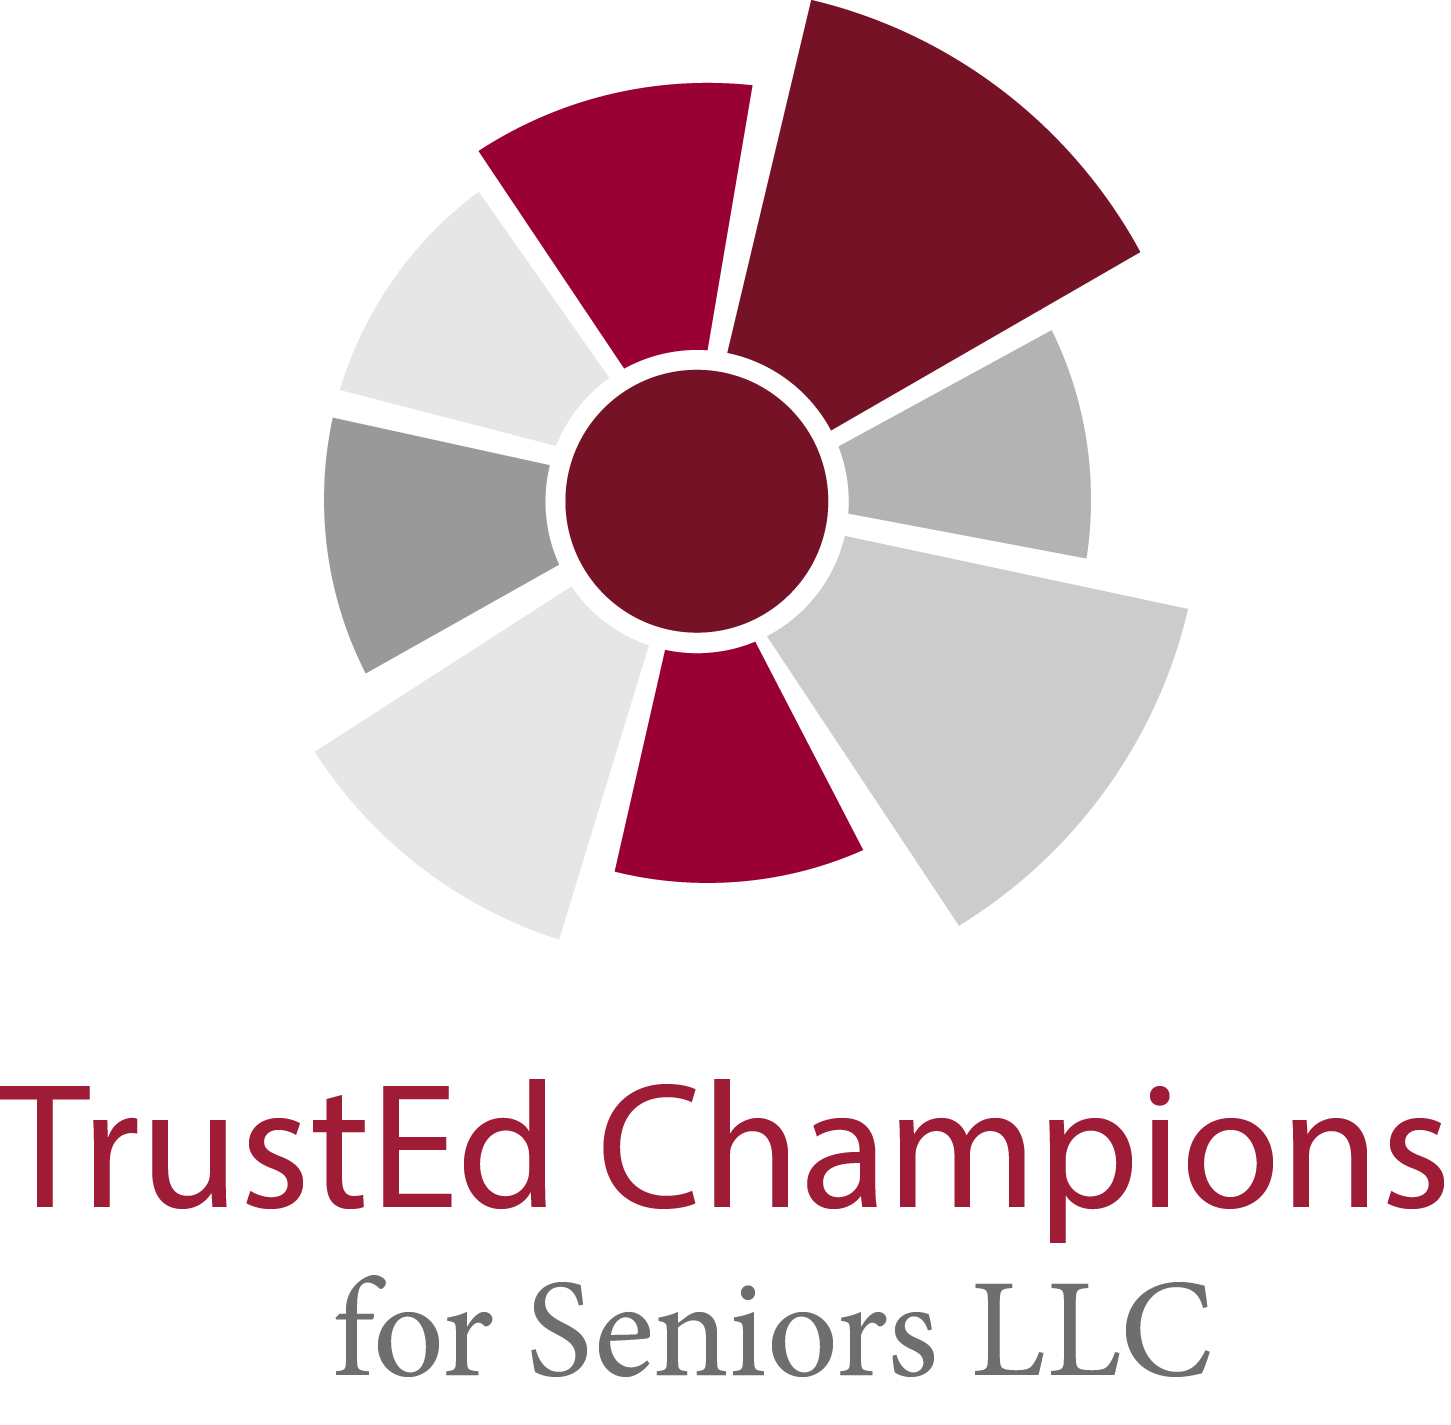 TrustEd Champions for Seniors LLC